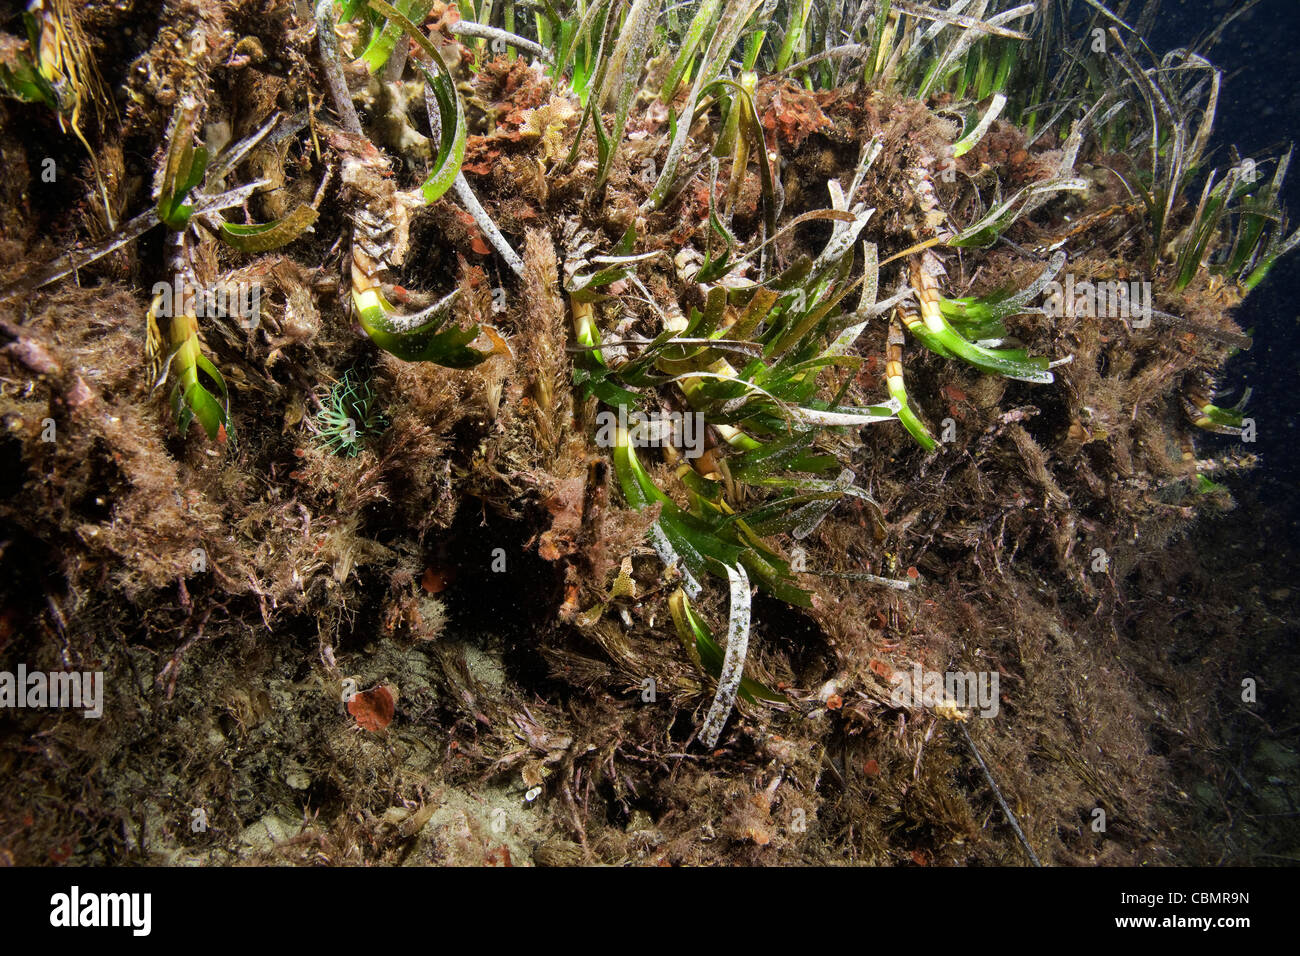 Inflorescence of Seagrass Meadows, Posidonia oceanica, Ischia, Mediterranean Sea, Italy Stock Photo